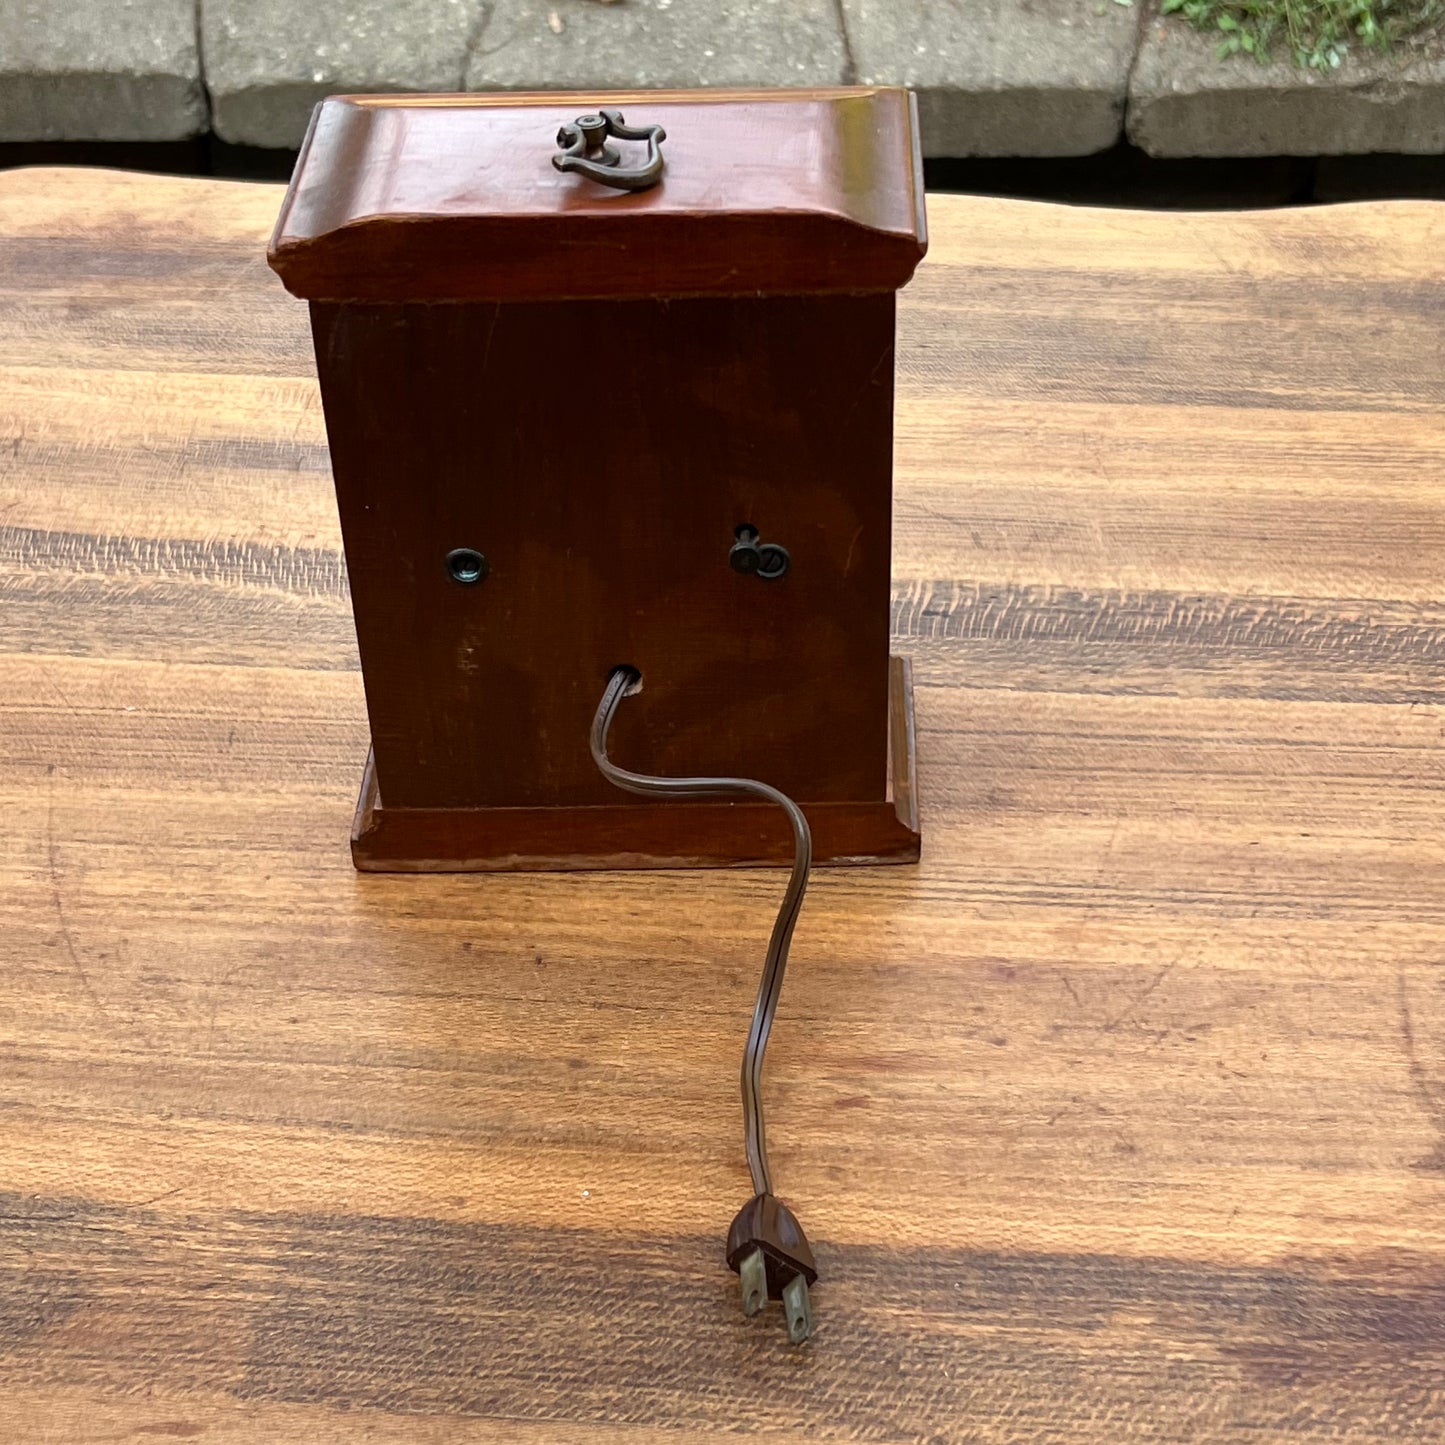 Vintage General Electric Wood Case Mantle Clock